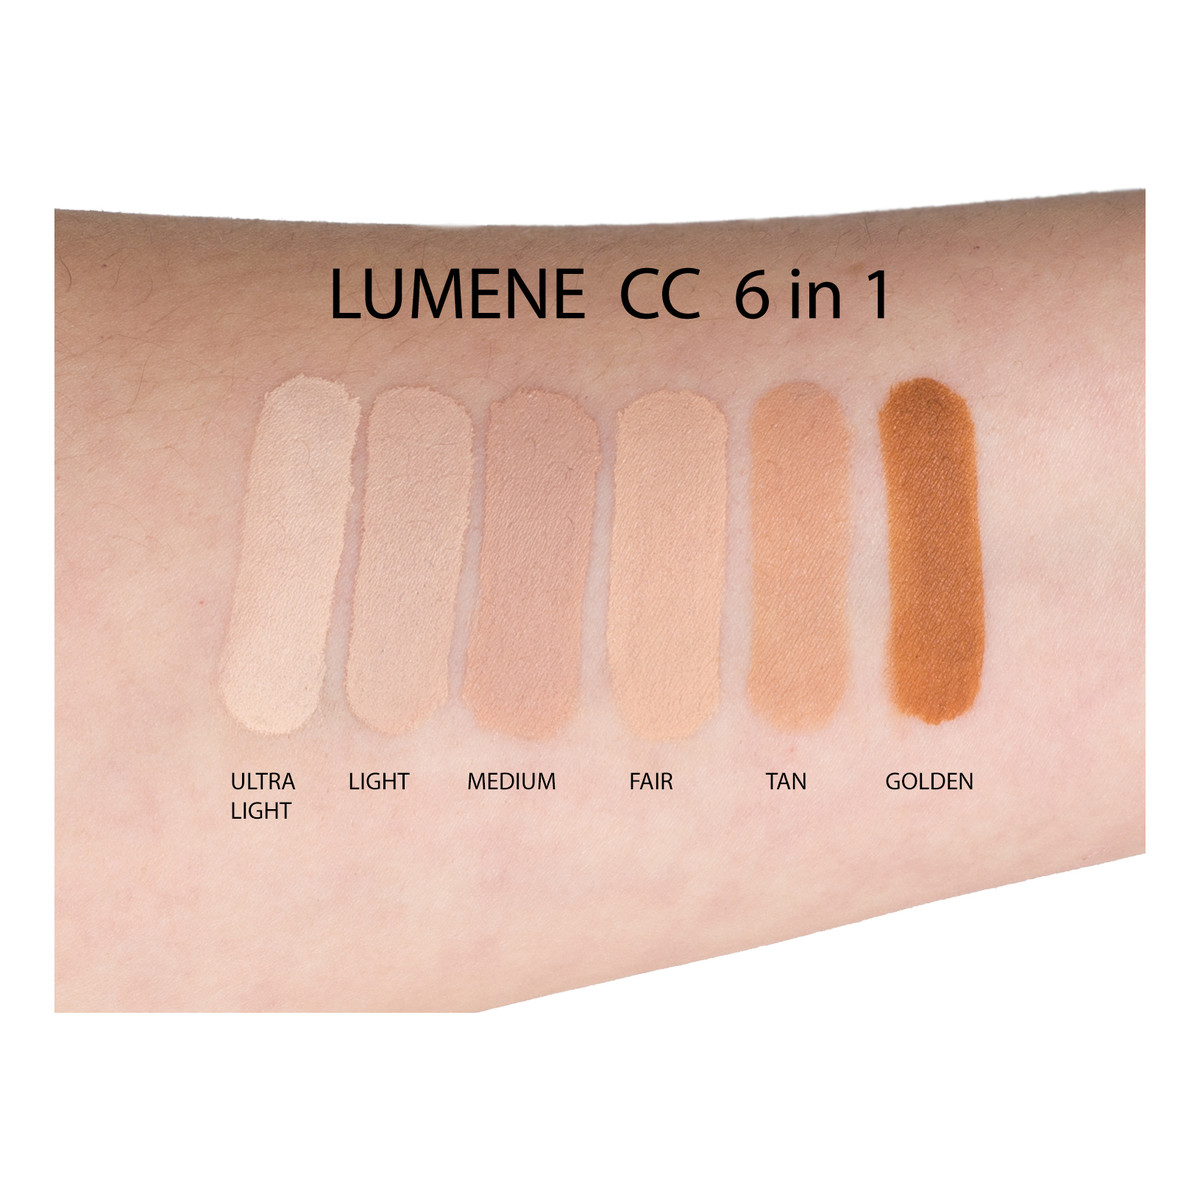 Lumene Nordic Chic CC Color Correcting Cream 6in1 Krem CC do twarzy 30ml